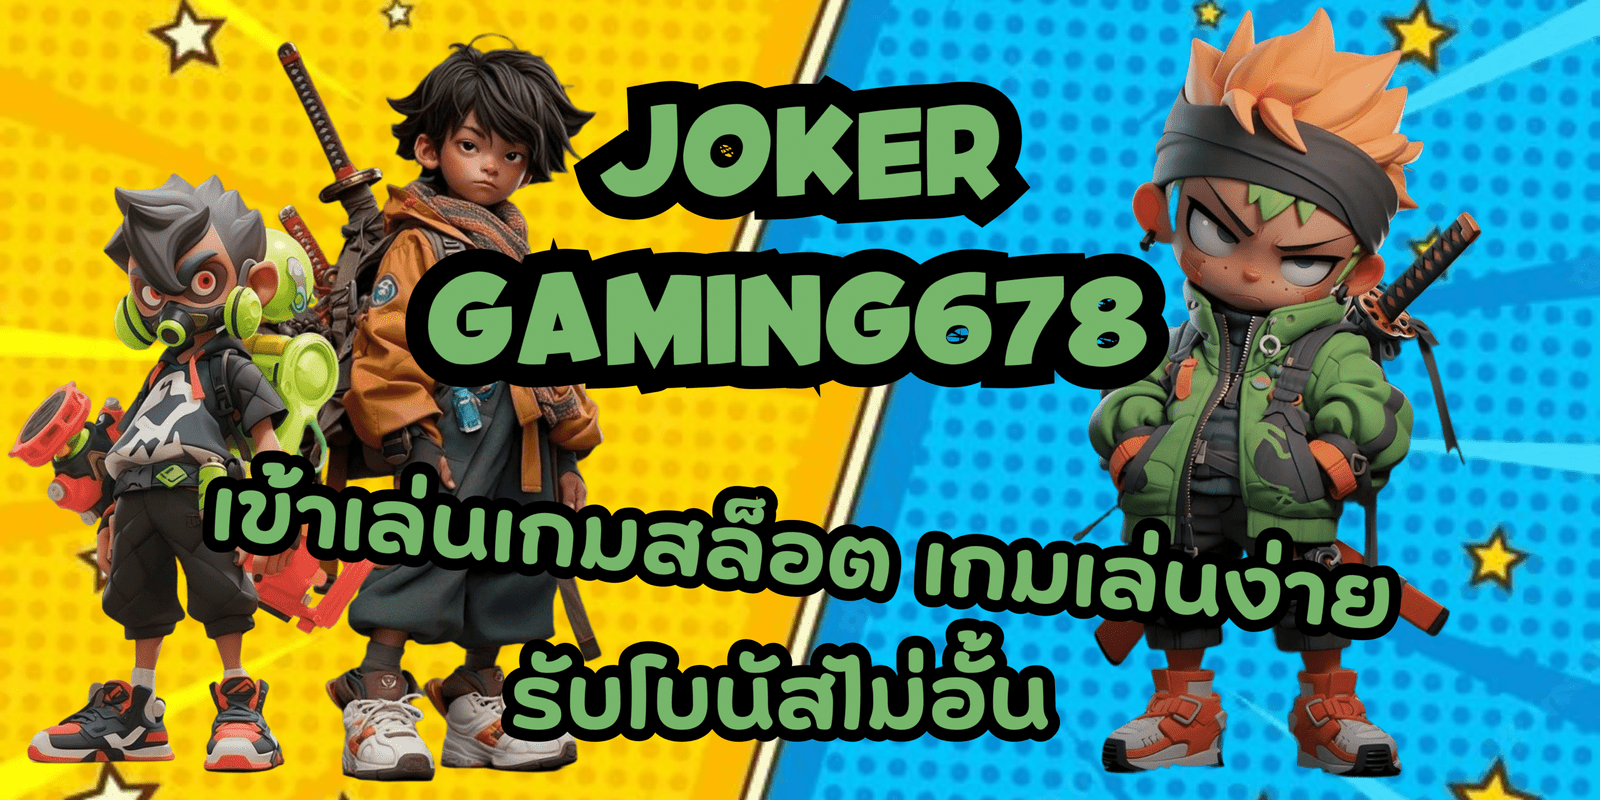 joker-gaming678-รับโบนัสไม่อั้น